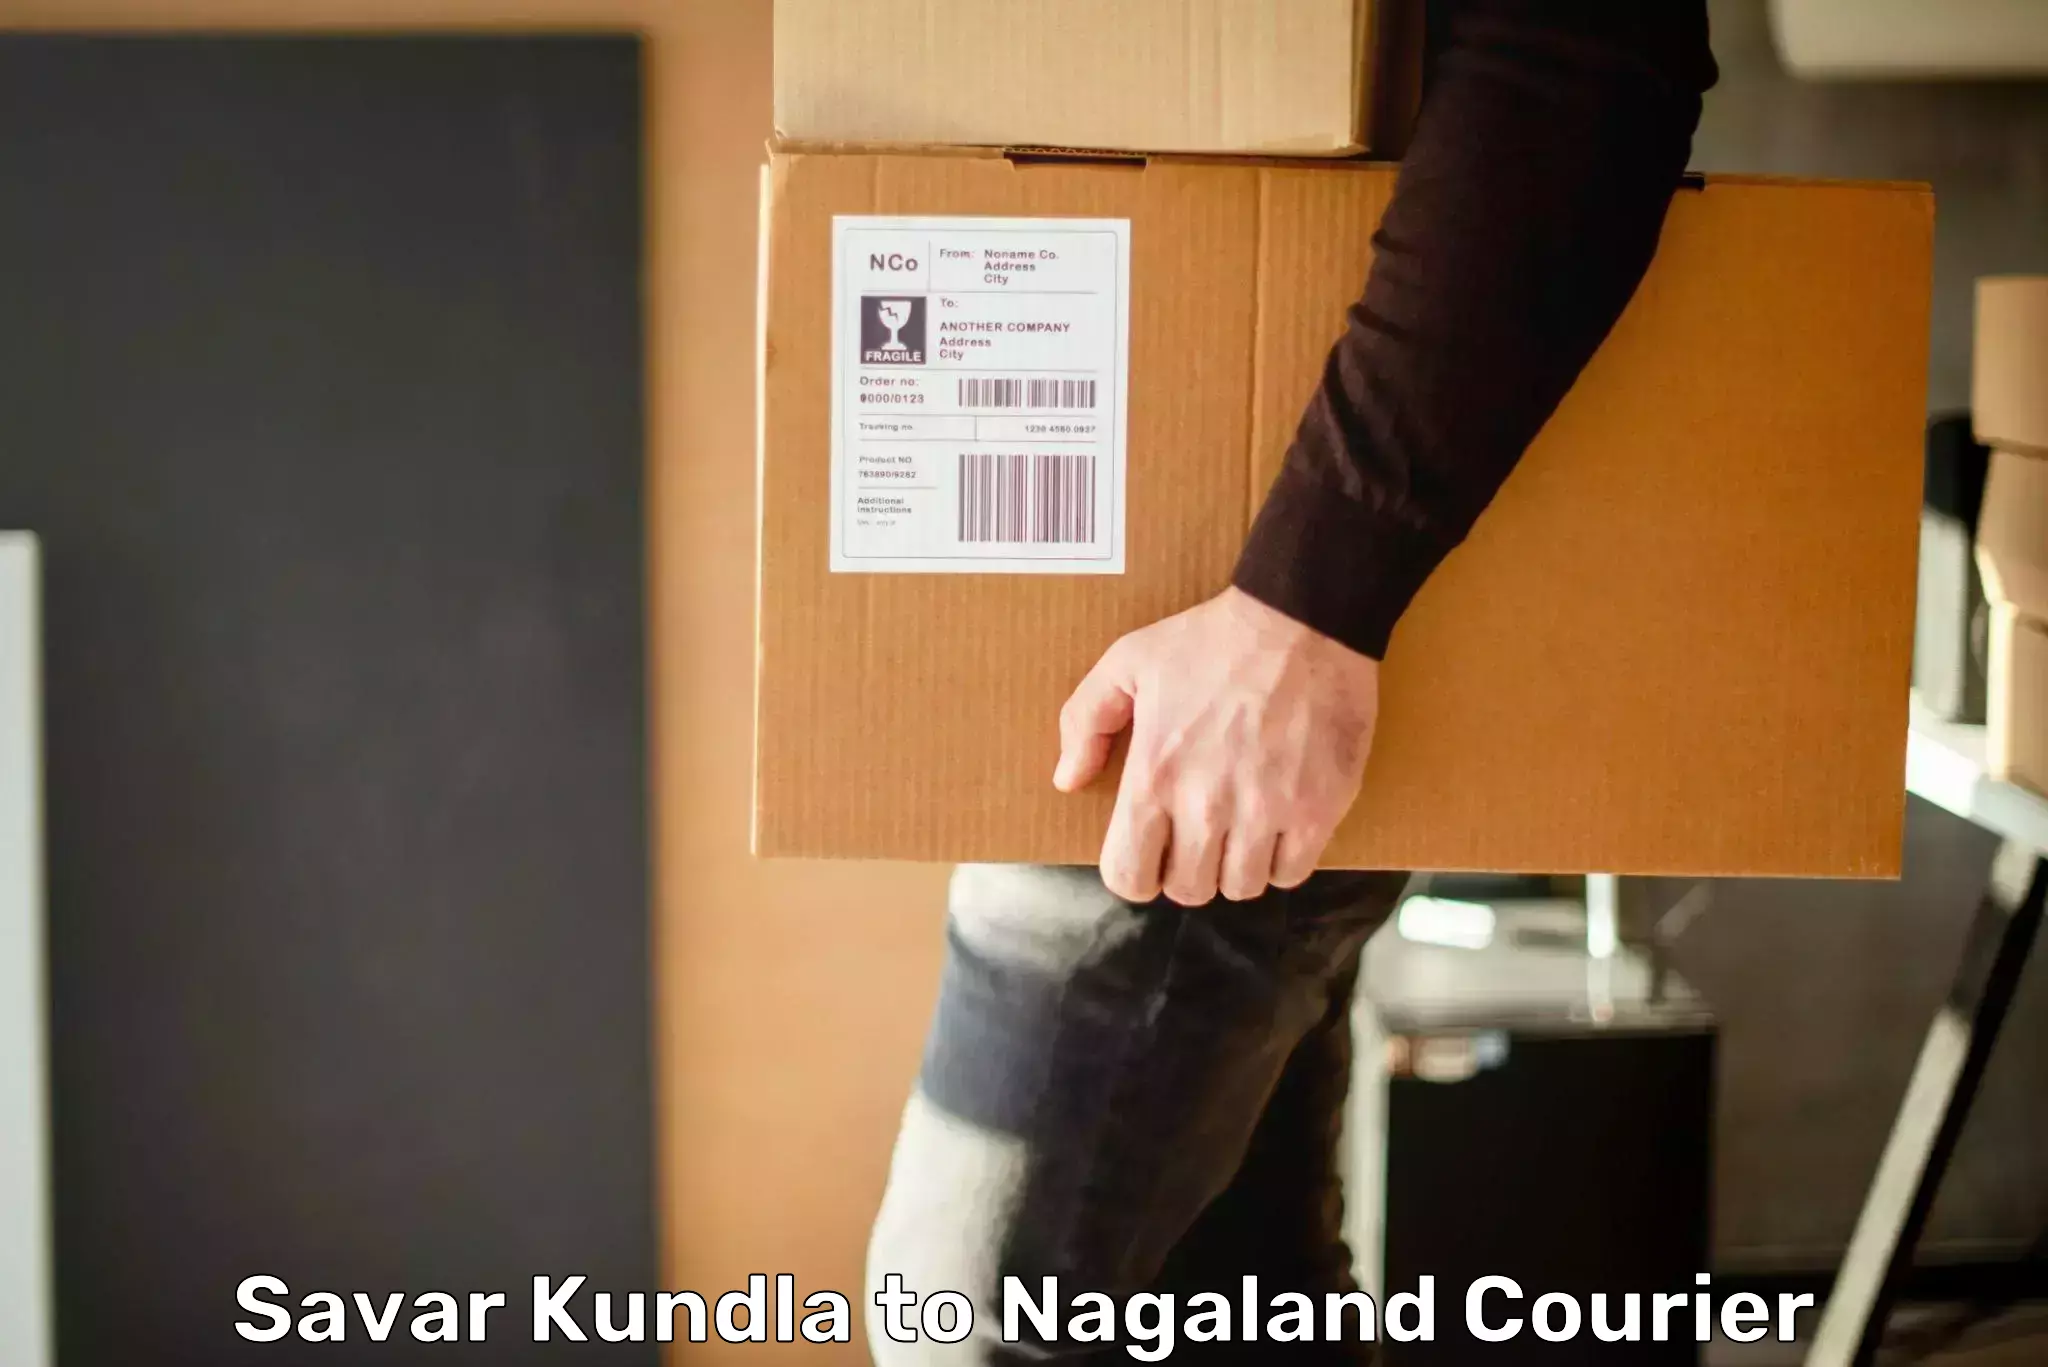 Fast shipping solutions Savar Kundla to Dimapur